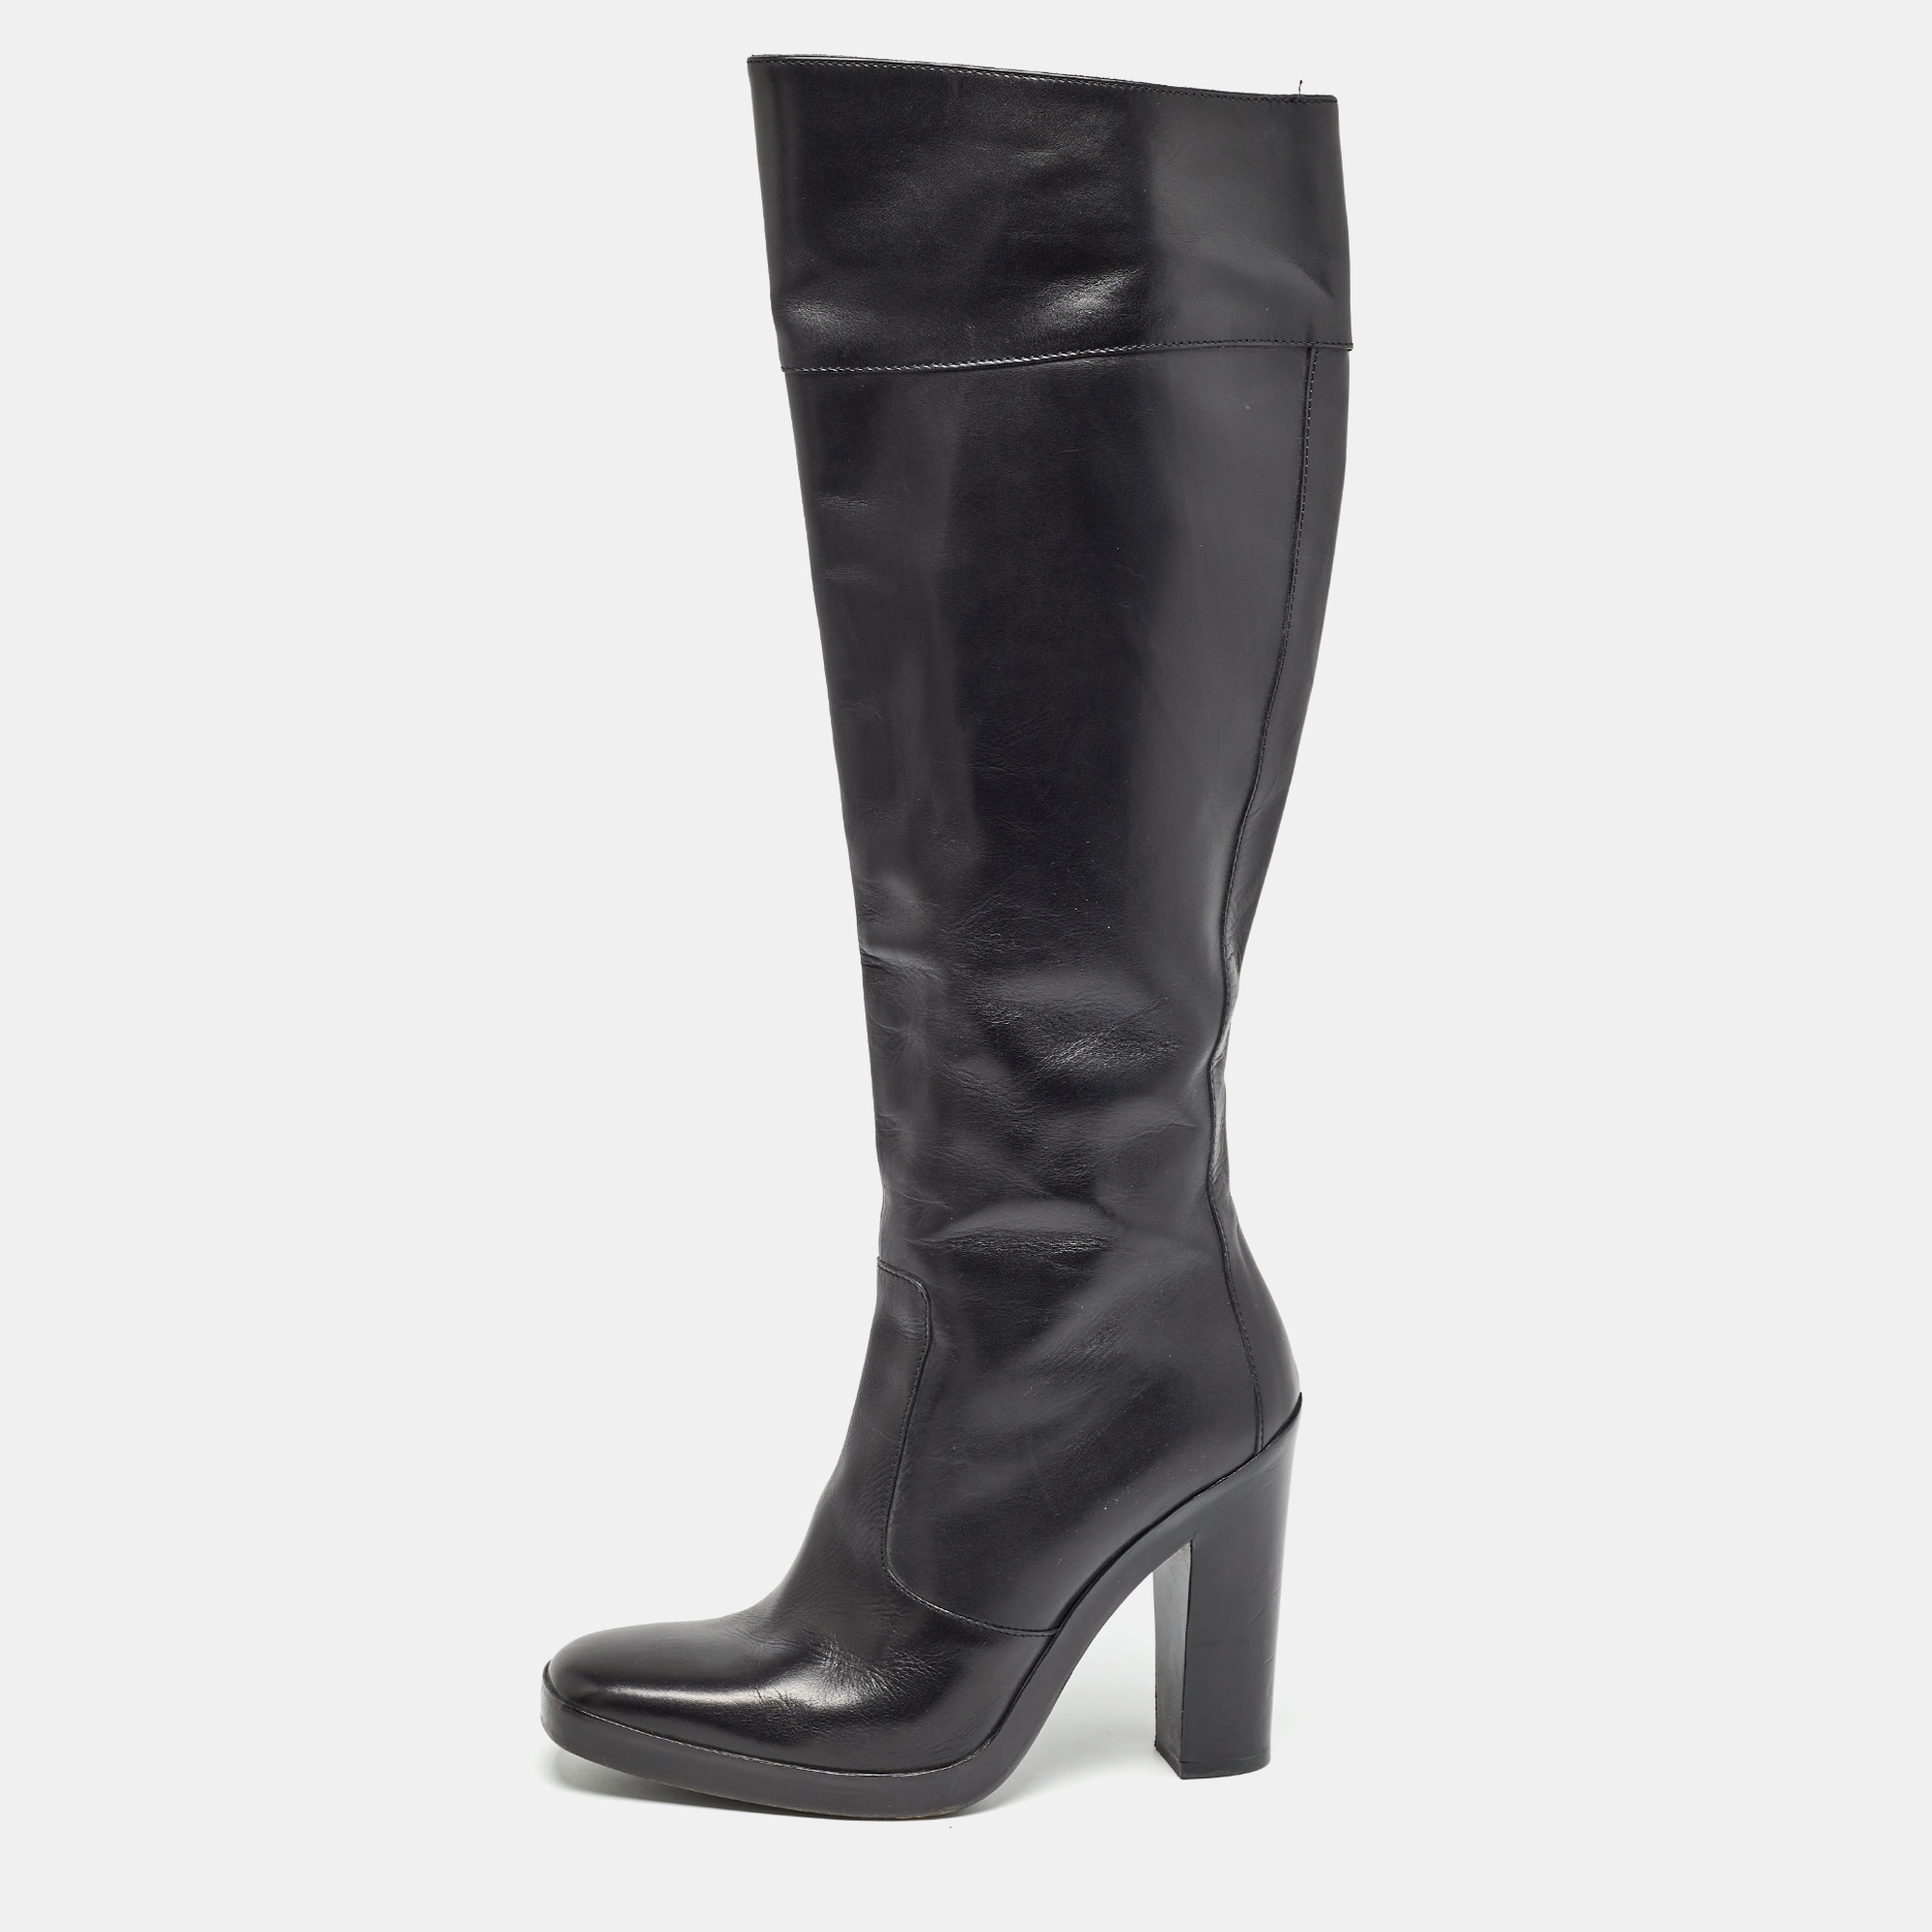 Balenciaga black leather knee length boots size 37